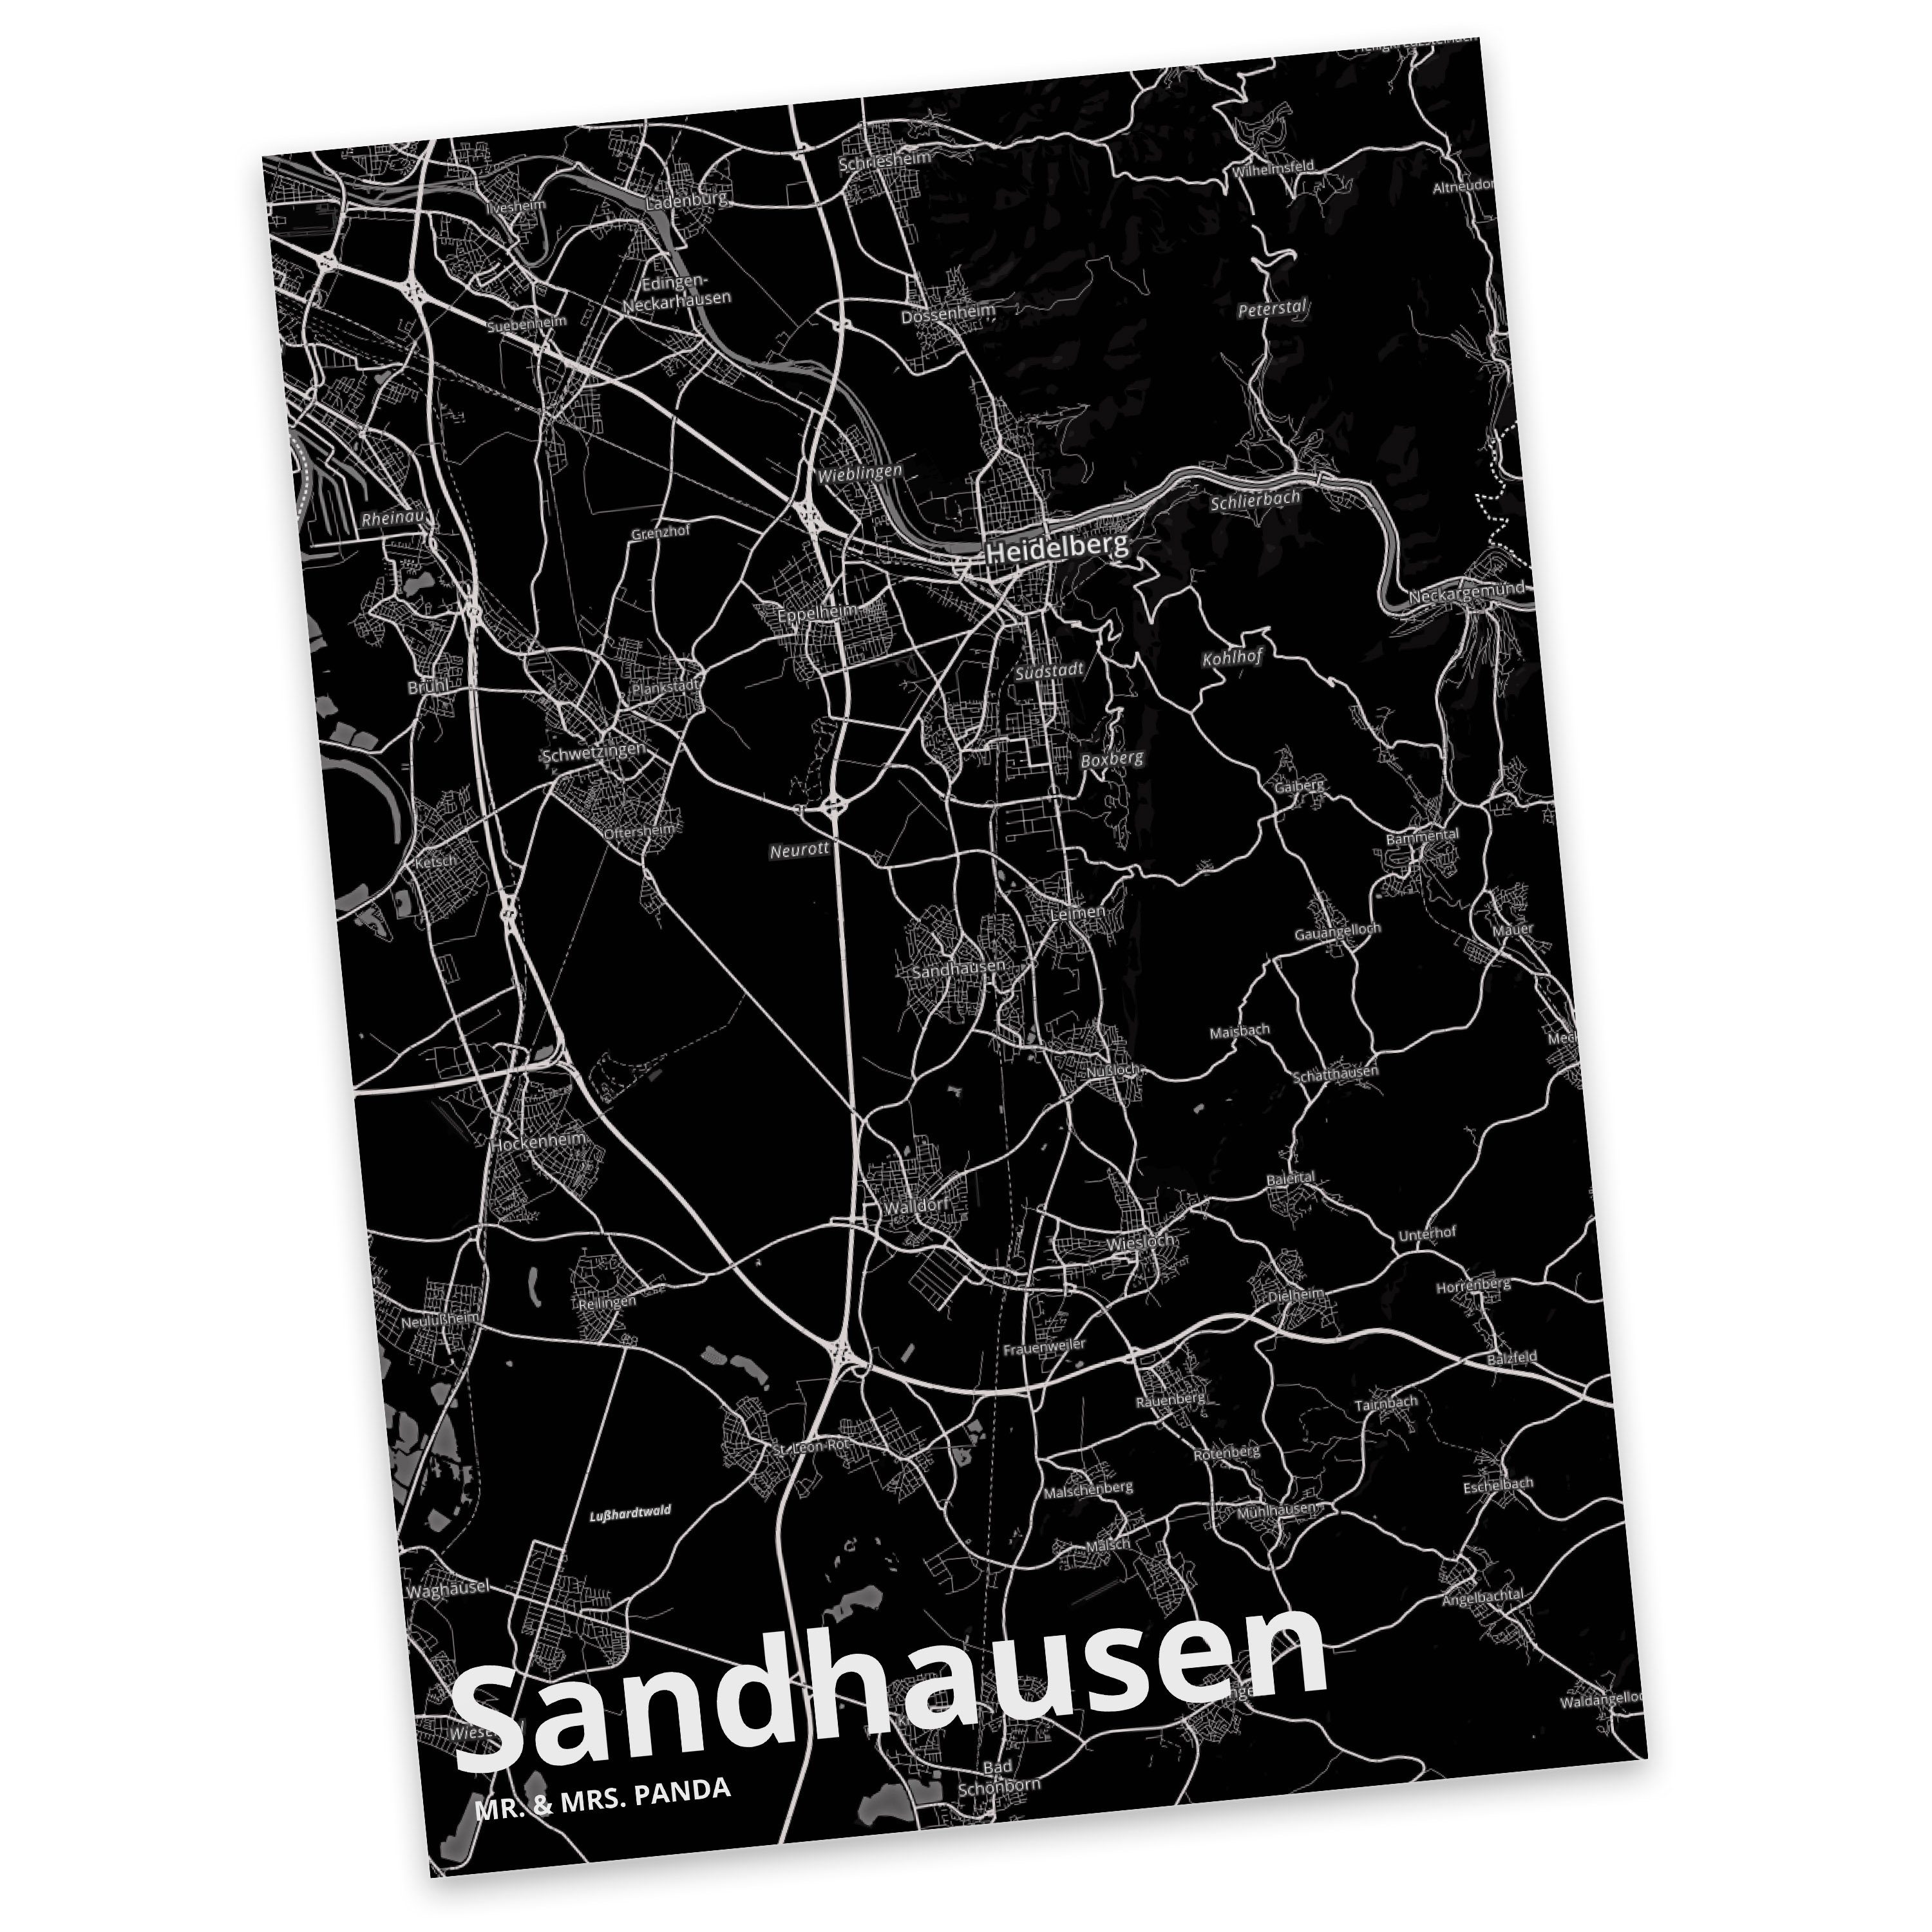 Mr. & Mrs. Panda Postkarte Sandhausen - Geschenk, Ort, Stadt Dorf Karte Landkarte Map Stadtplan